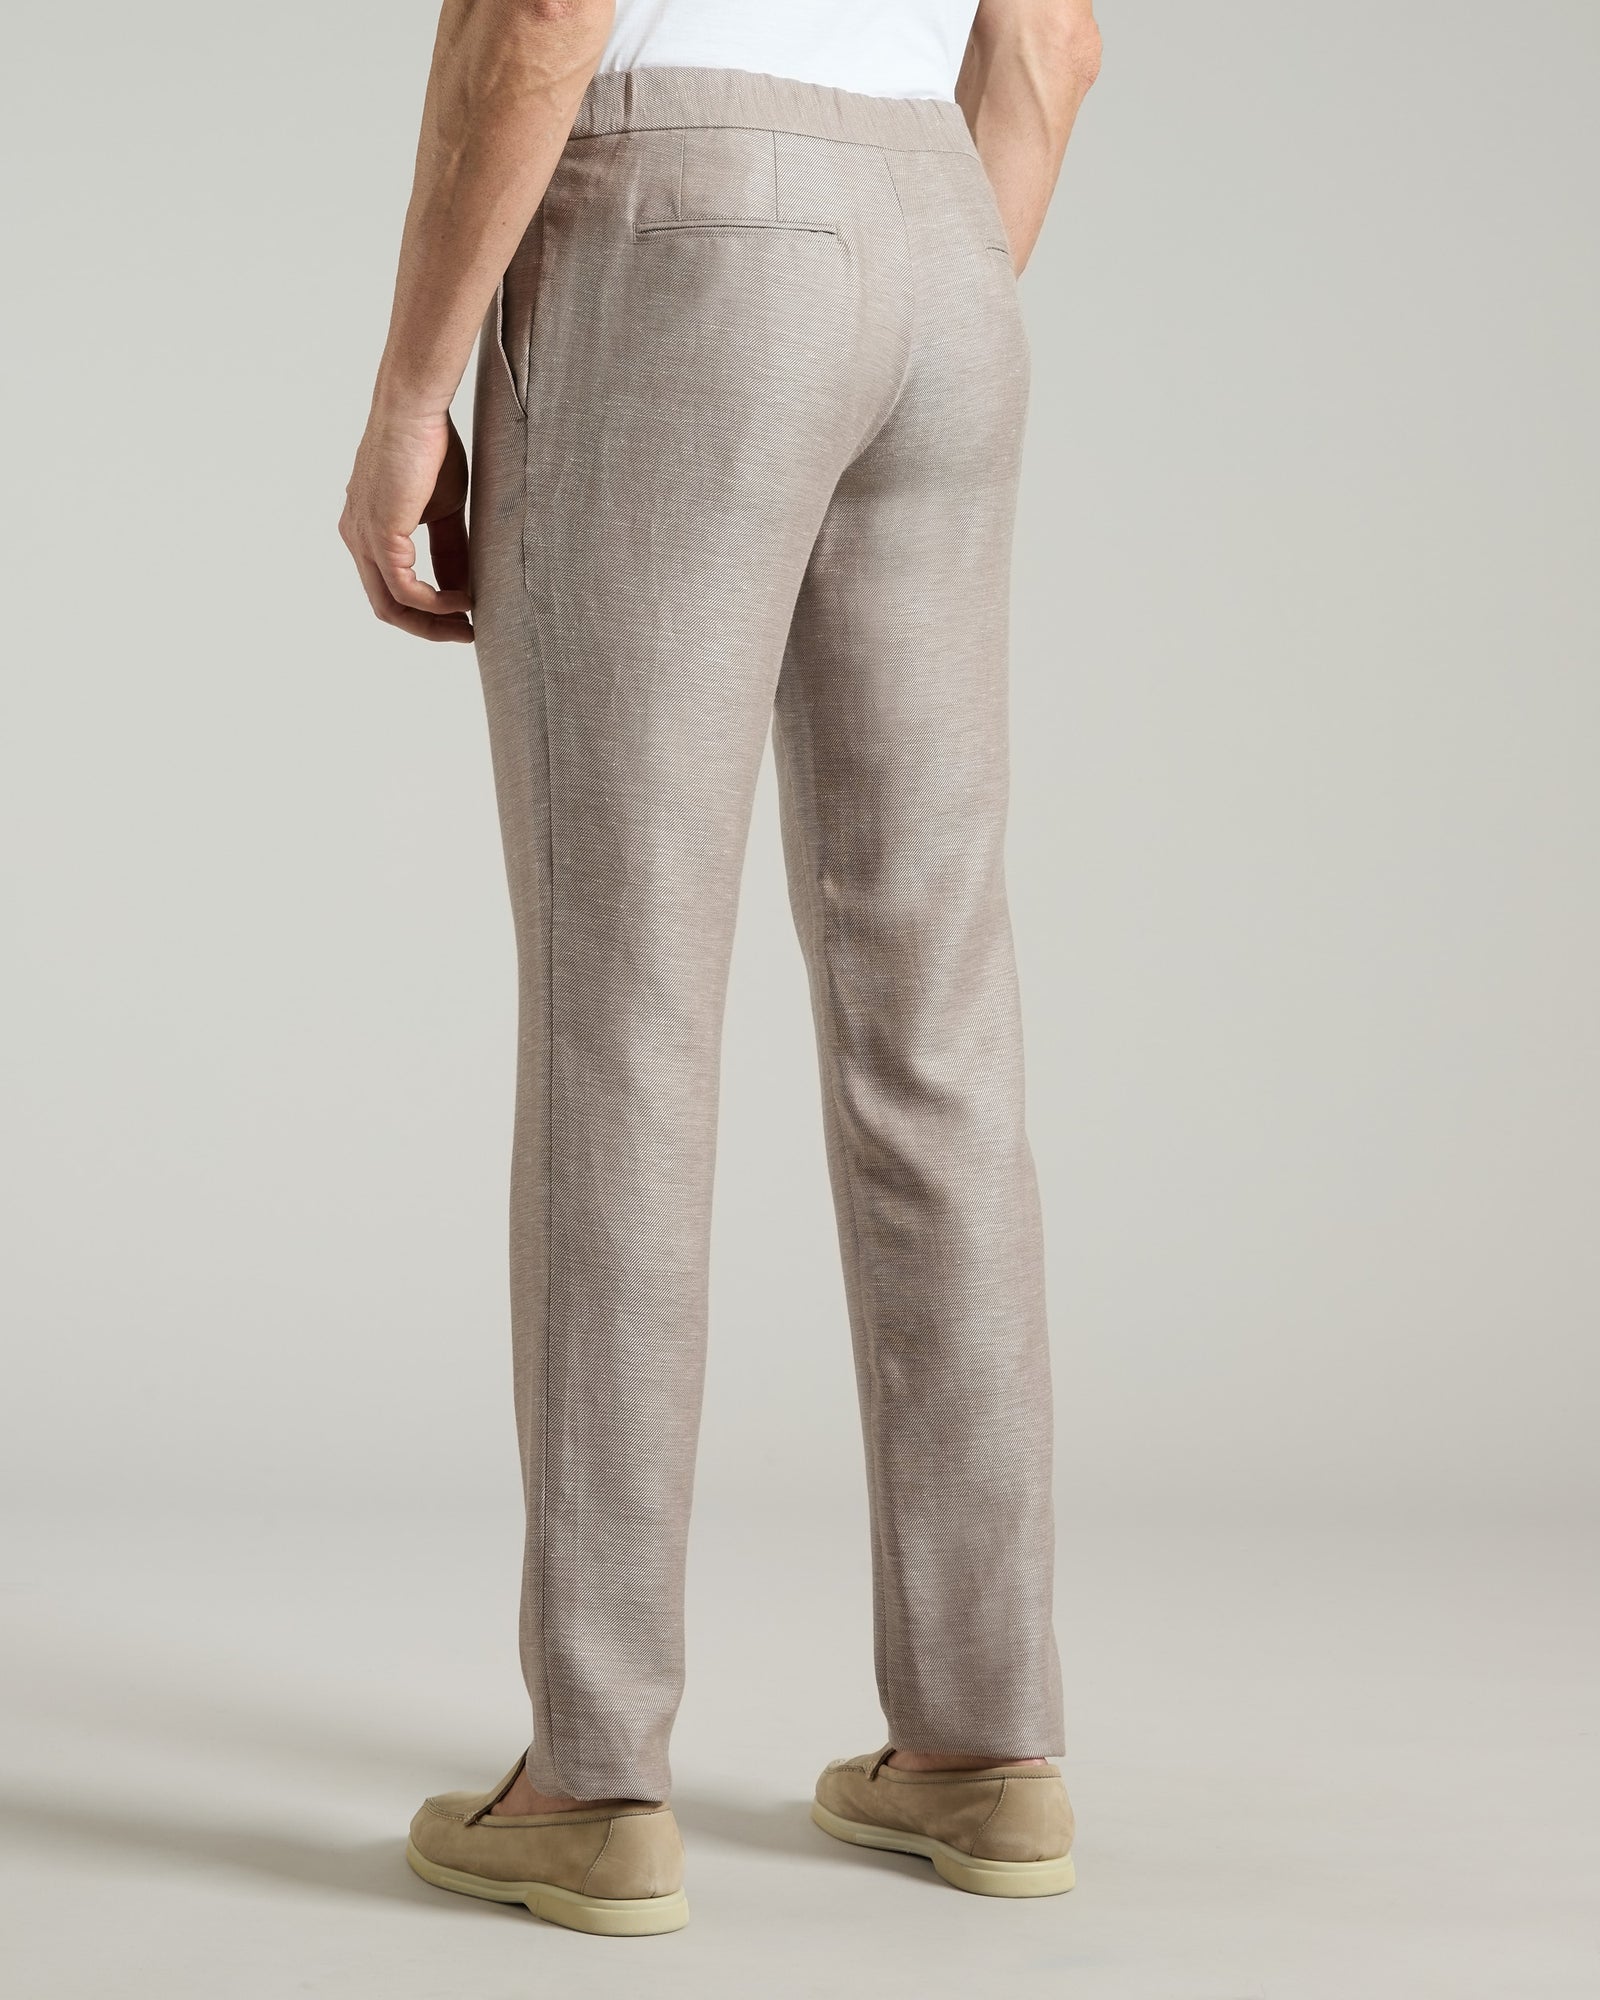 Pantalone in Summer Cashmere 4.0 marrone